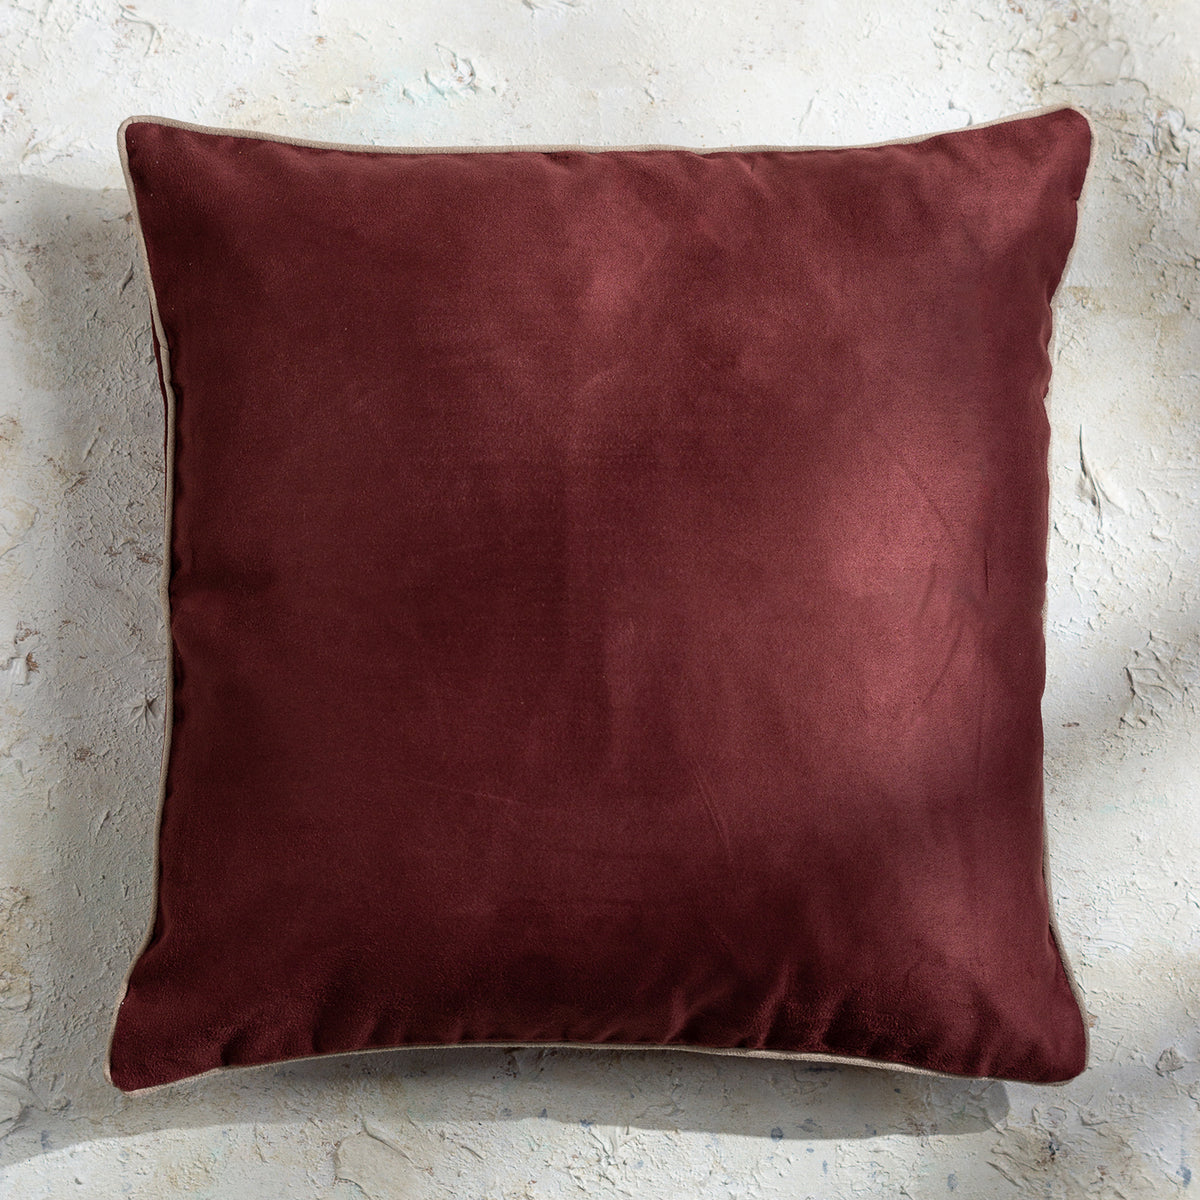 Buy Lush Velvet Cushion Cover Peach 16 X 16 Inches Set of 5 Online